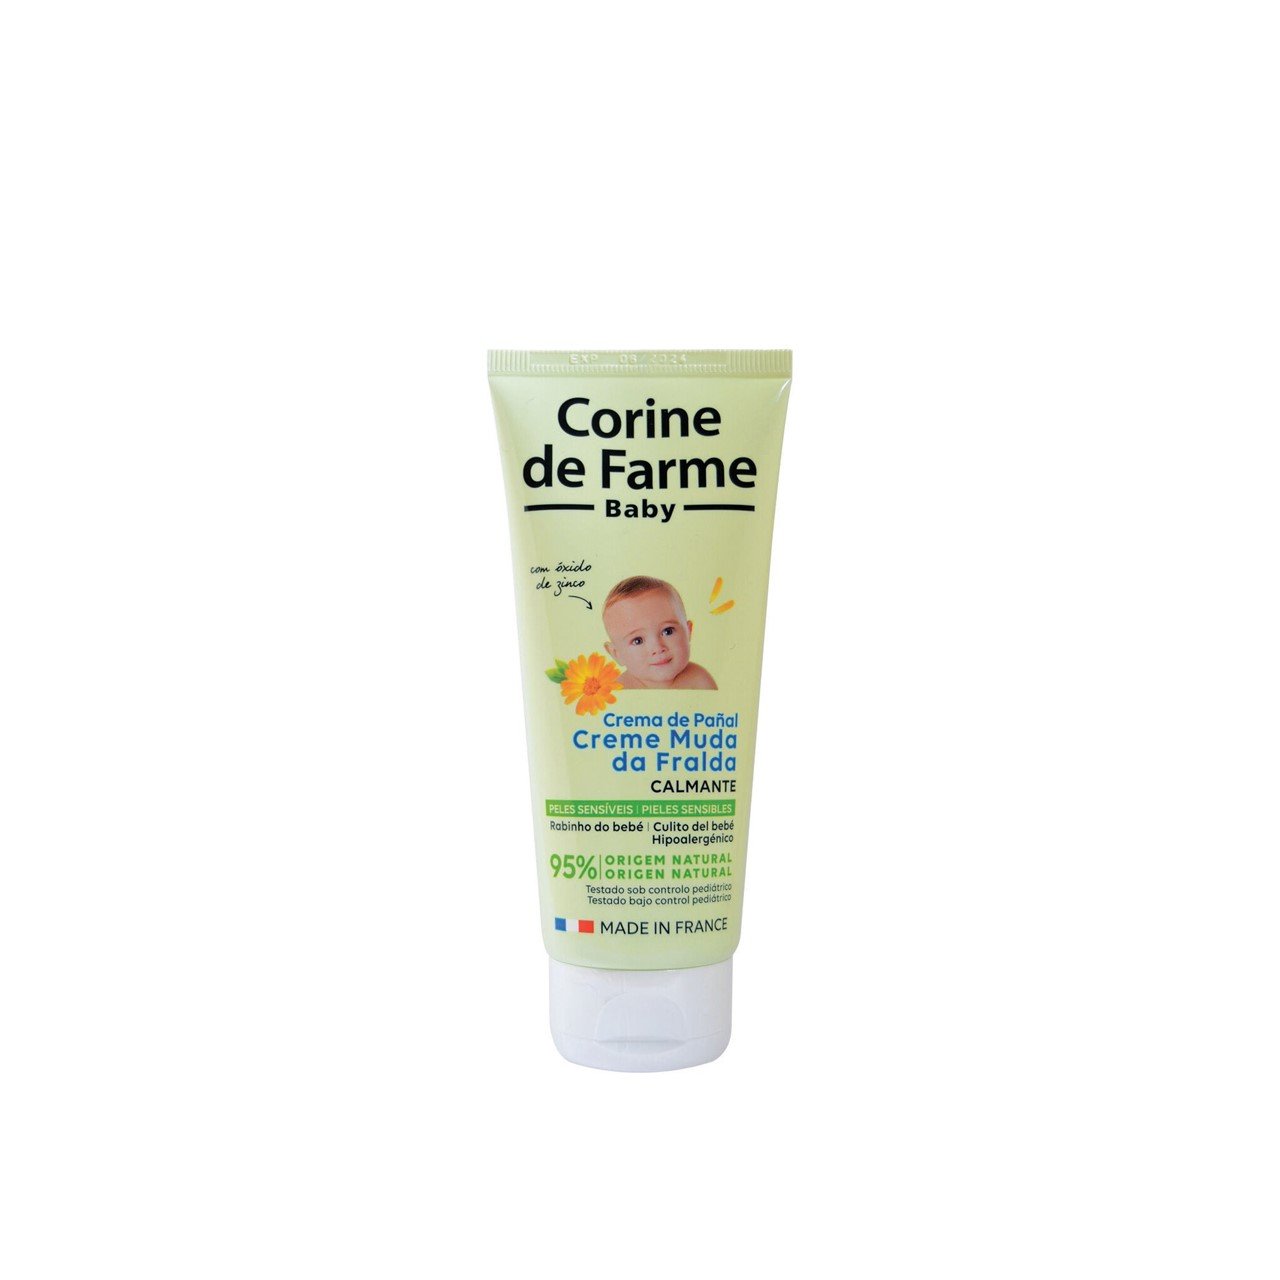 Corine de Farme Baby Soothing Nappy Change Cream With Zinc Oxide 100ml (3.38floz)